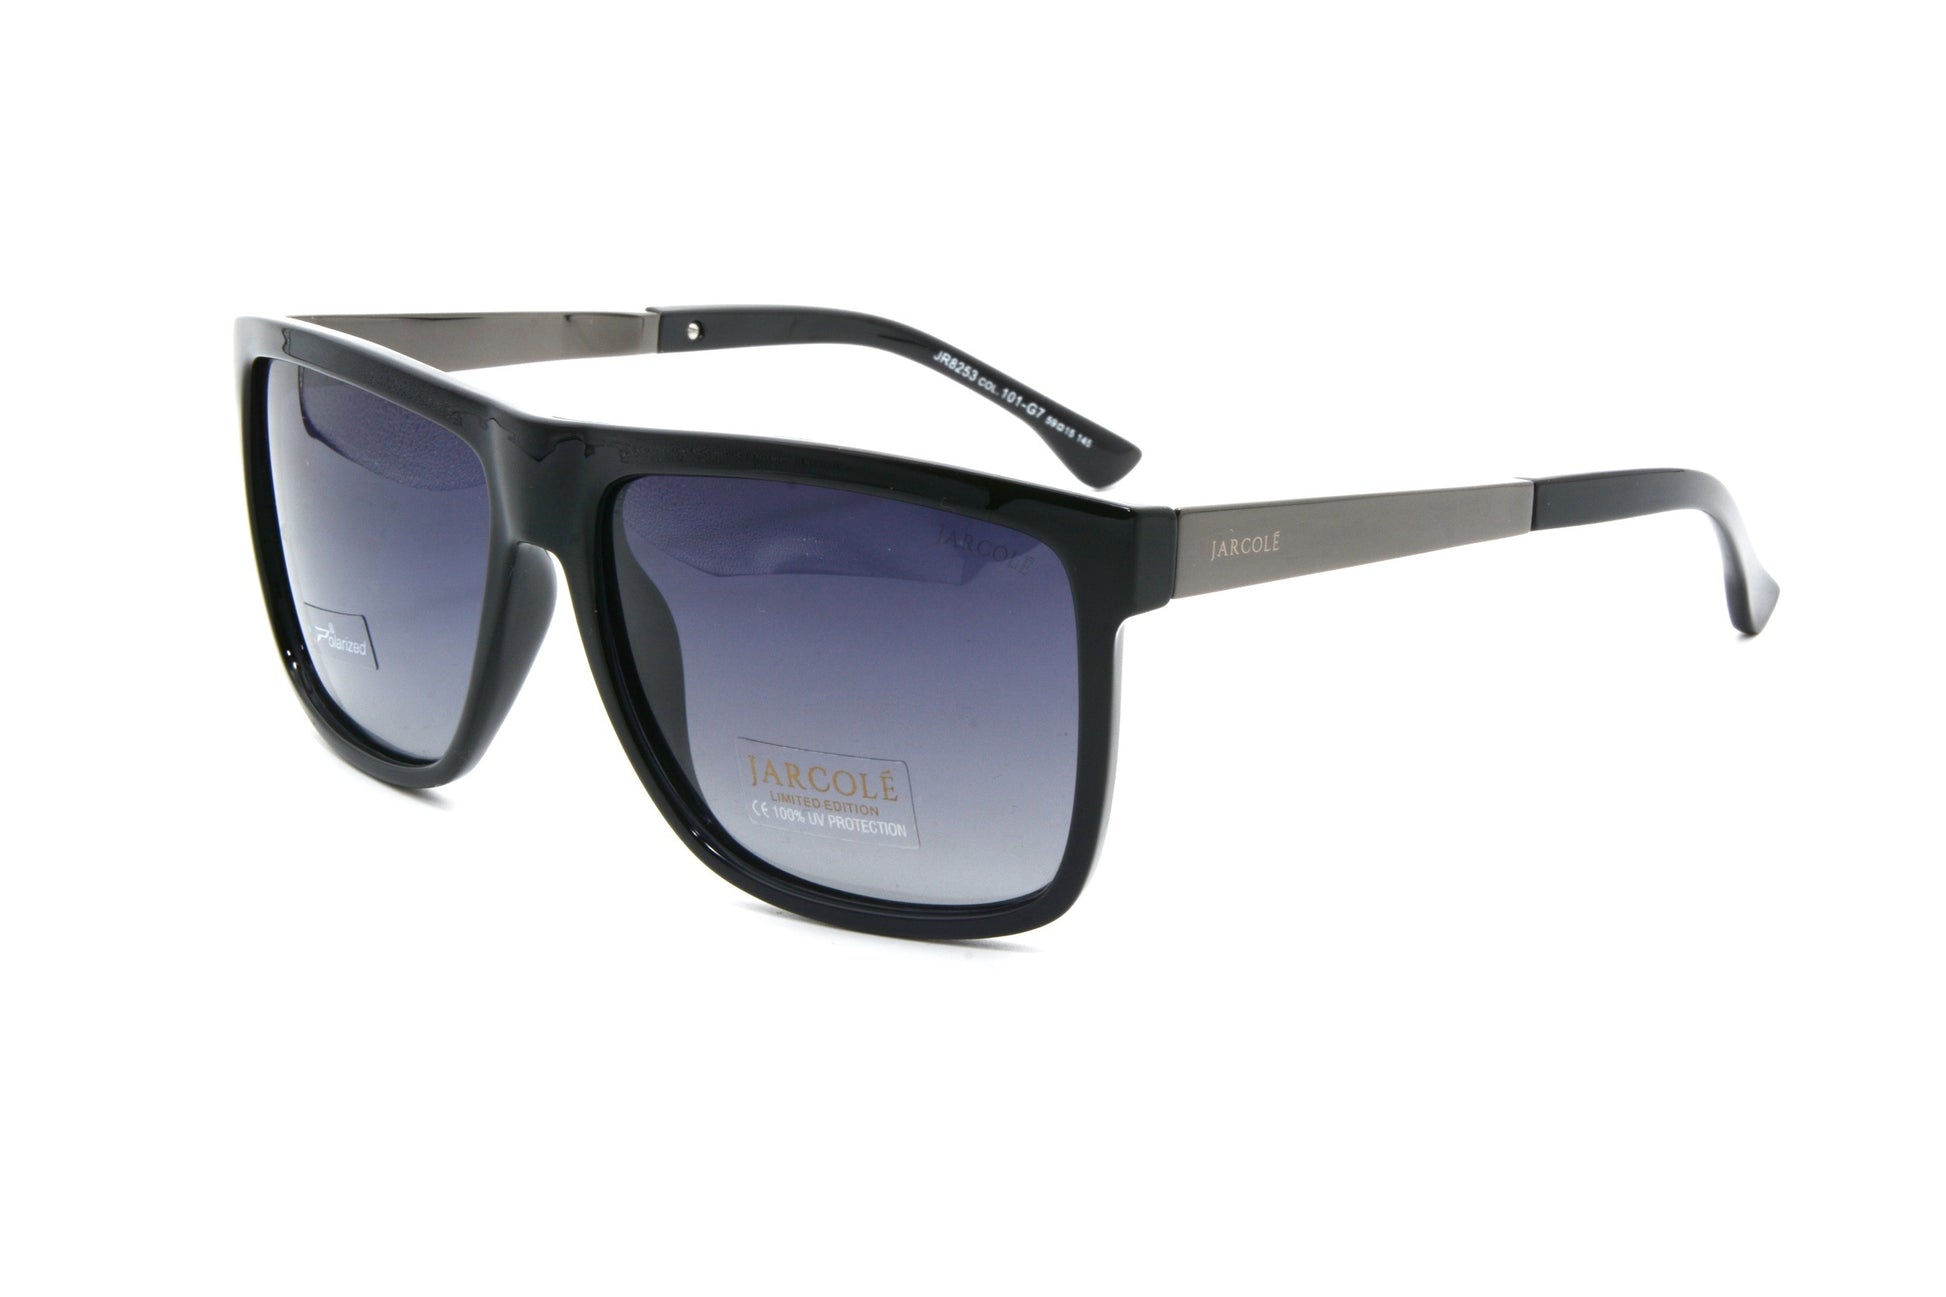 Jarcole sunglasses 8253 101-G7